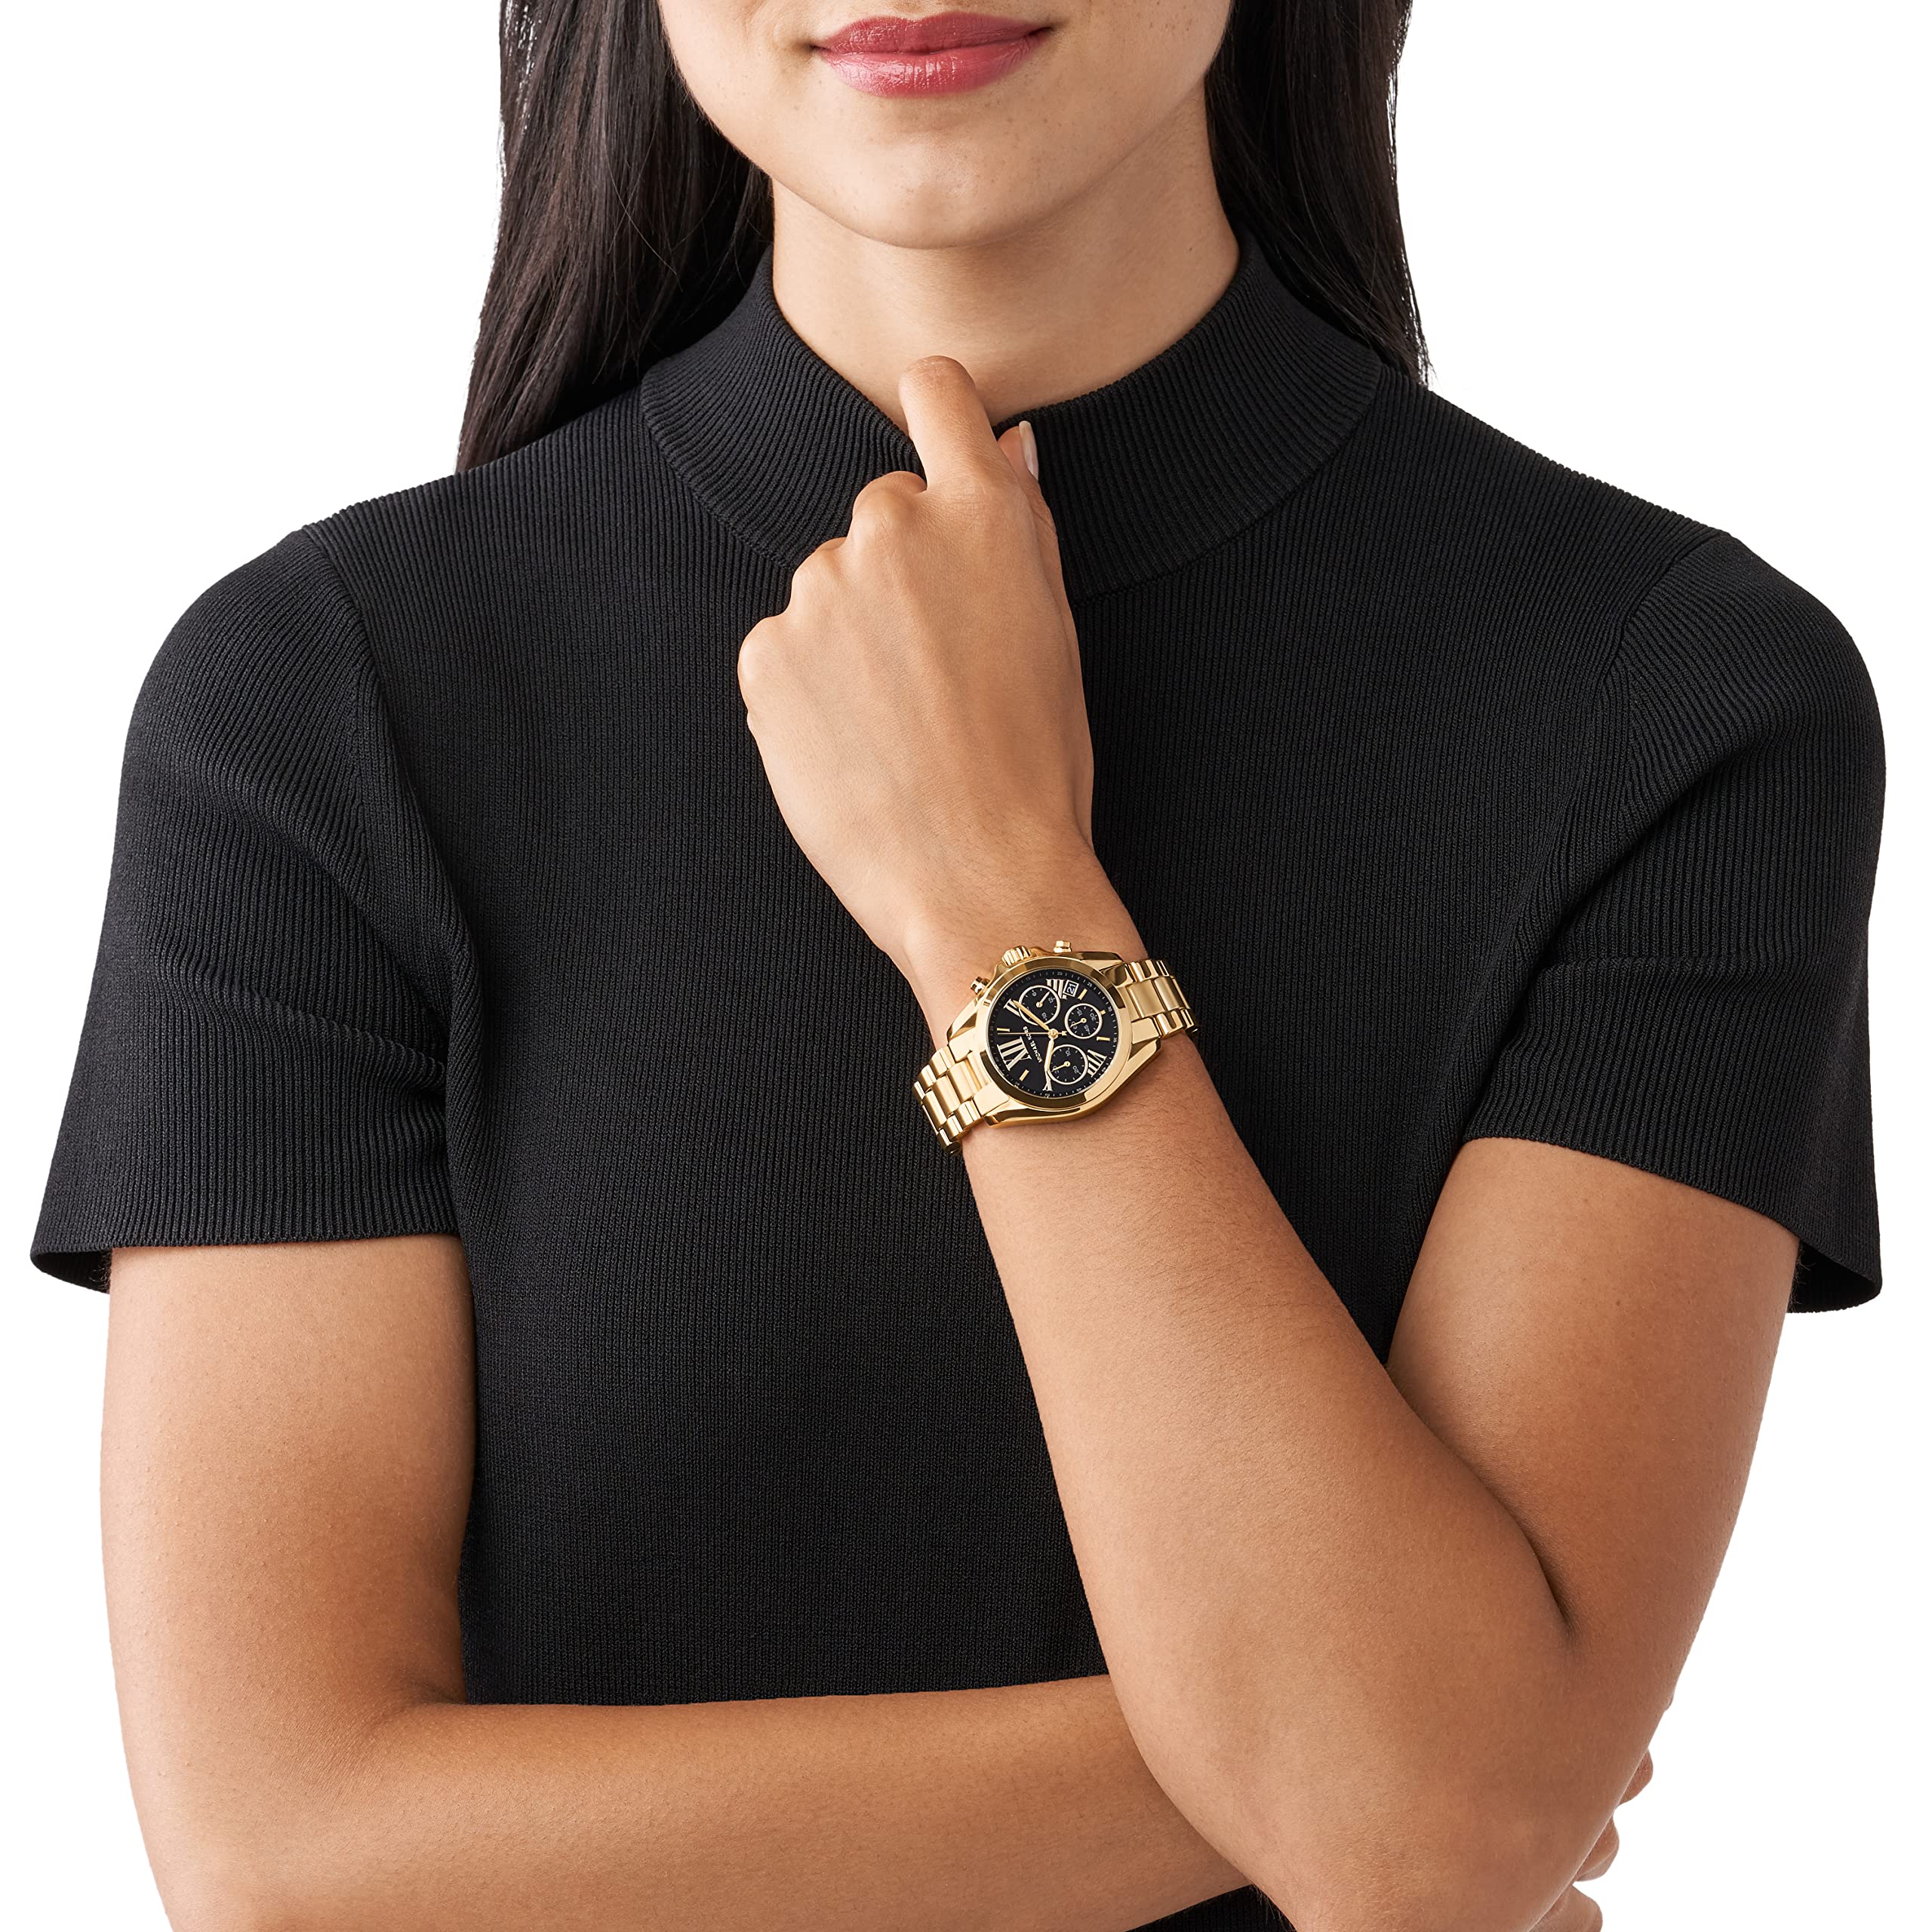 Michael Kors Women's Bradshaw Stainless Steel Watch